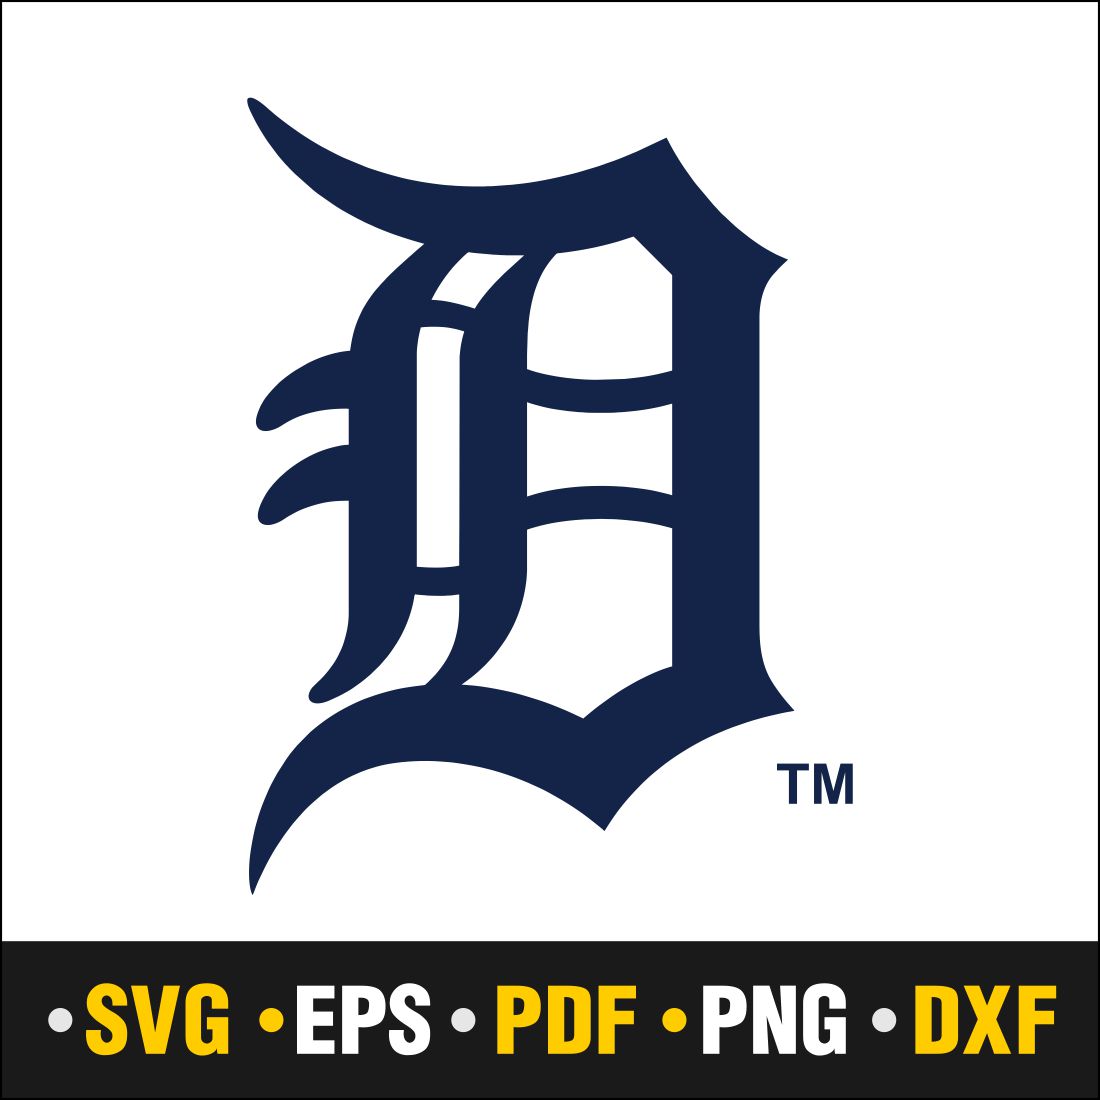 Detroit Tigers Svg, Tigers Svg. Vector Cut file Cricut, Silhouette, Pdf  Png, Dxf, Decal, Sticker, Stencil, Vinyl.